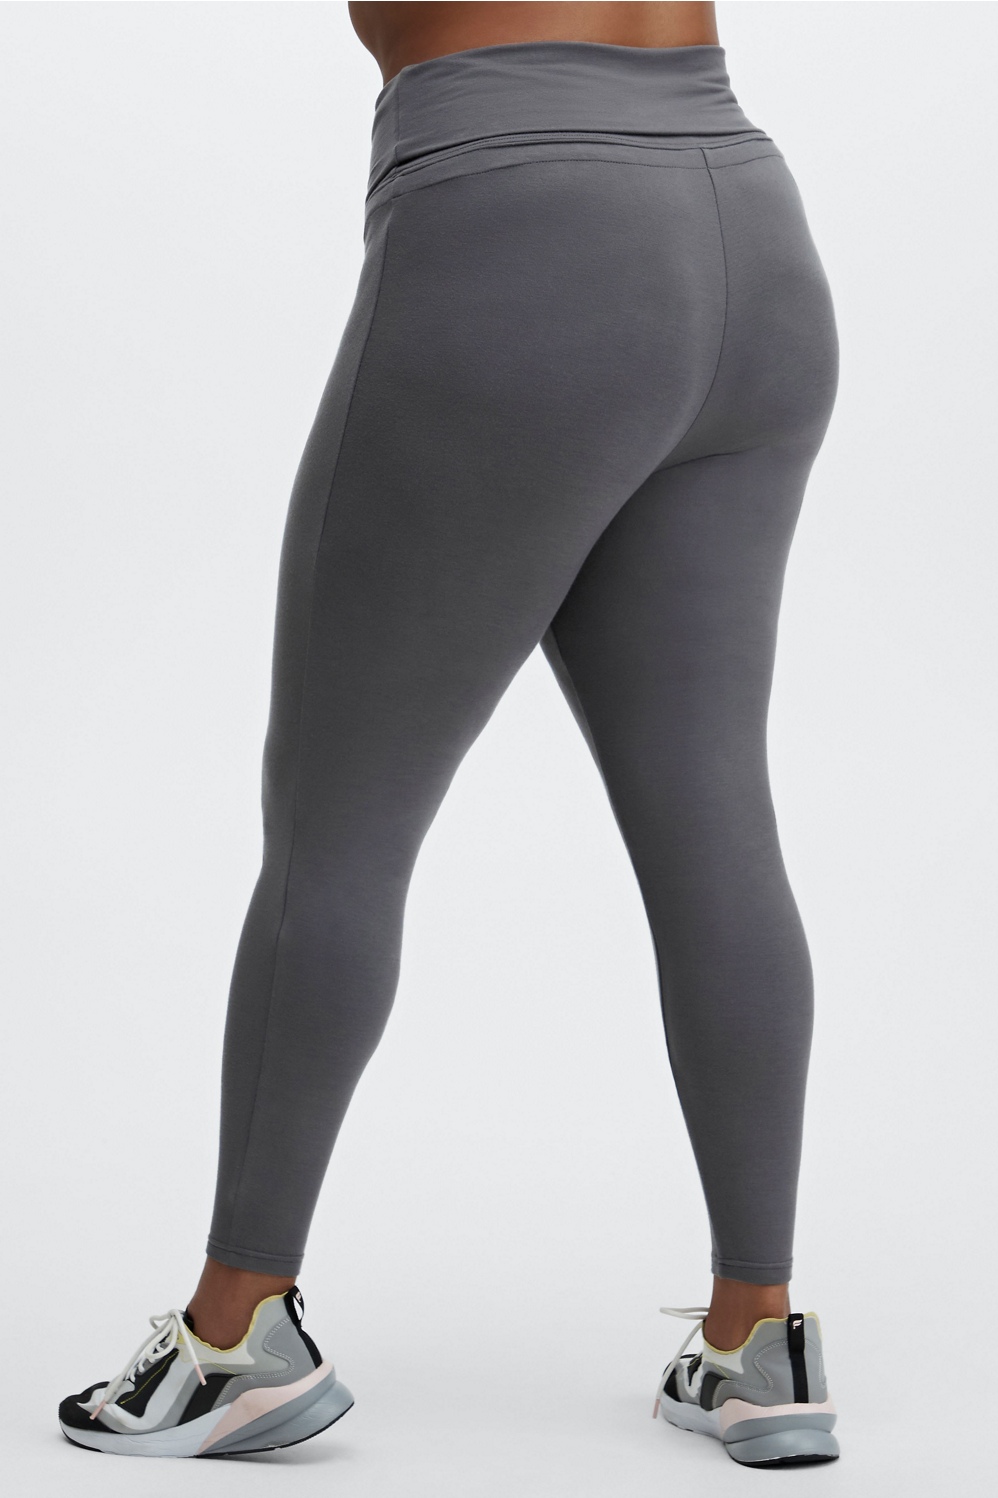 ECHT Women's Tempo Dot Series Leggings Grey Size Small High Rise Drawstring